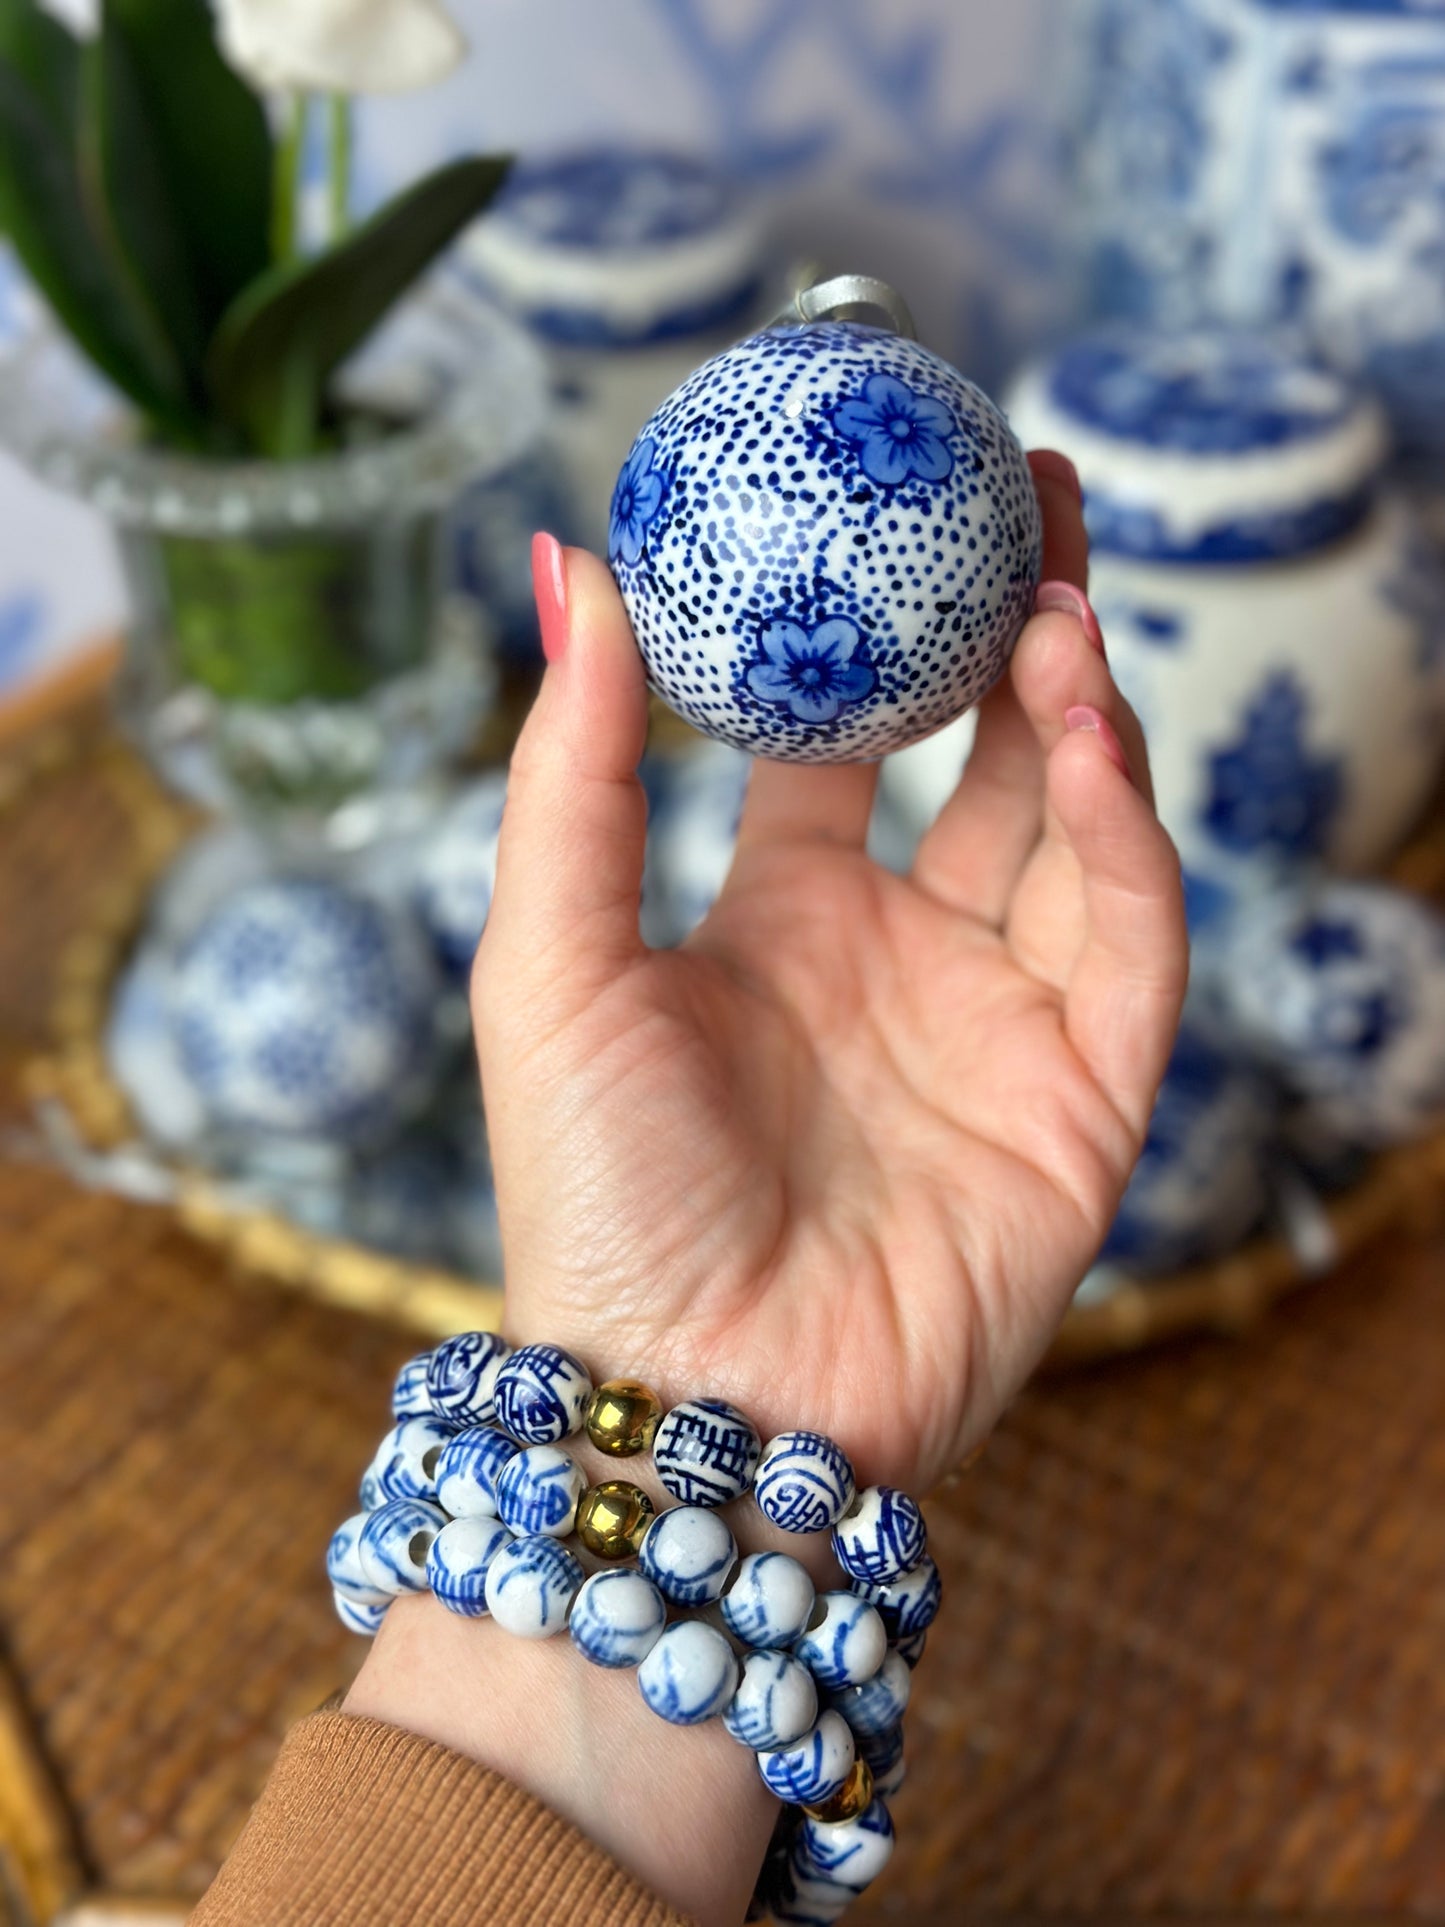 PRE SALE - Set (6) Blue & White Chinoiserie Porcelain Ornaments, 2.5" Wide